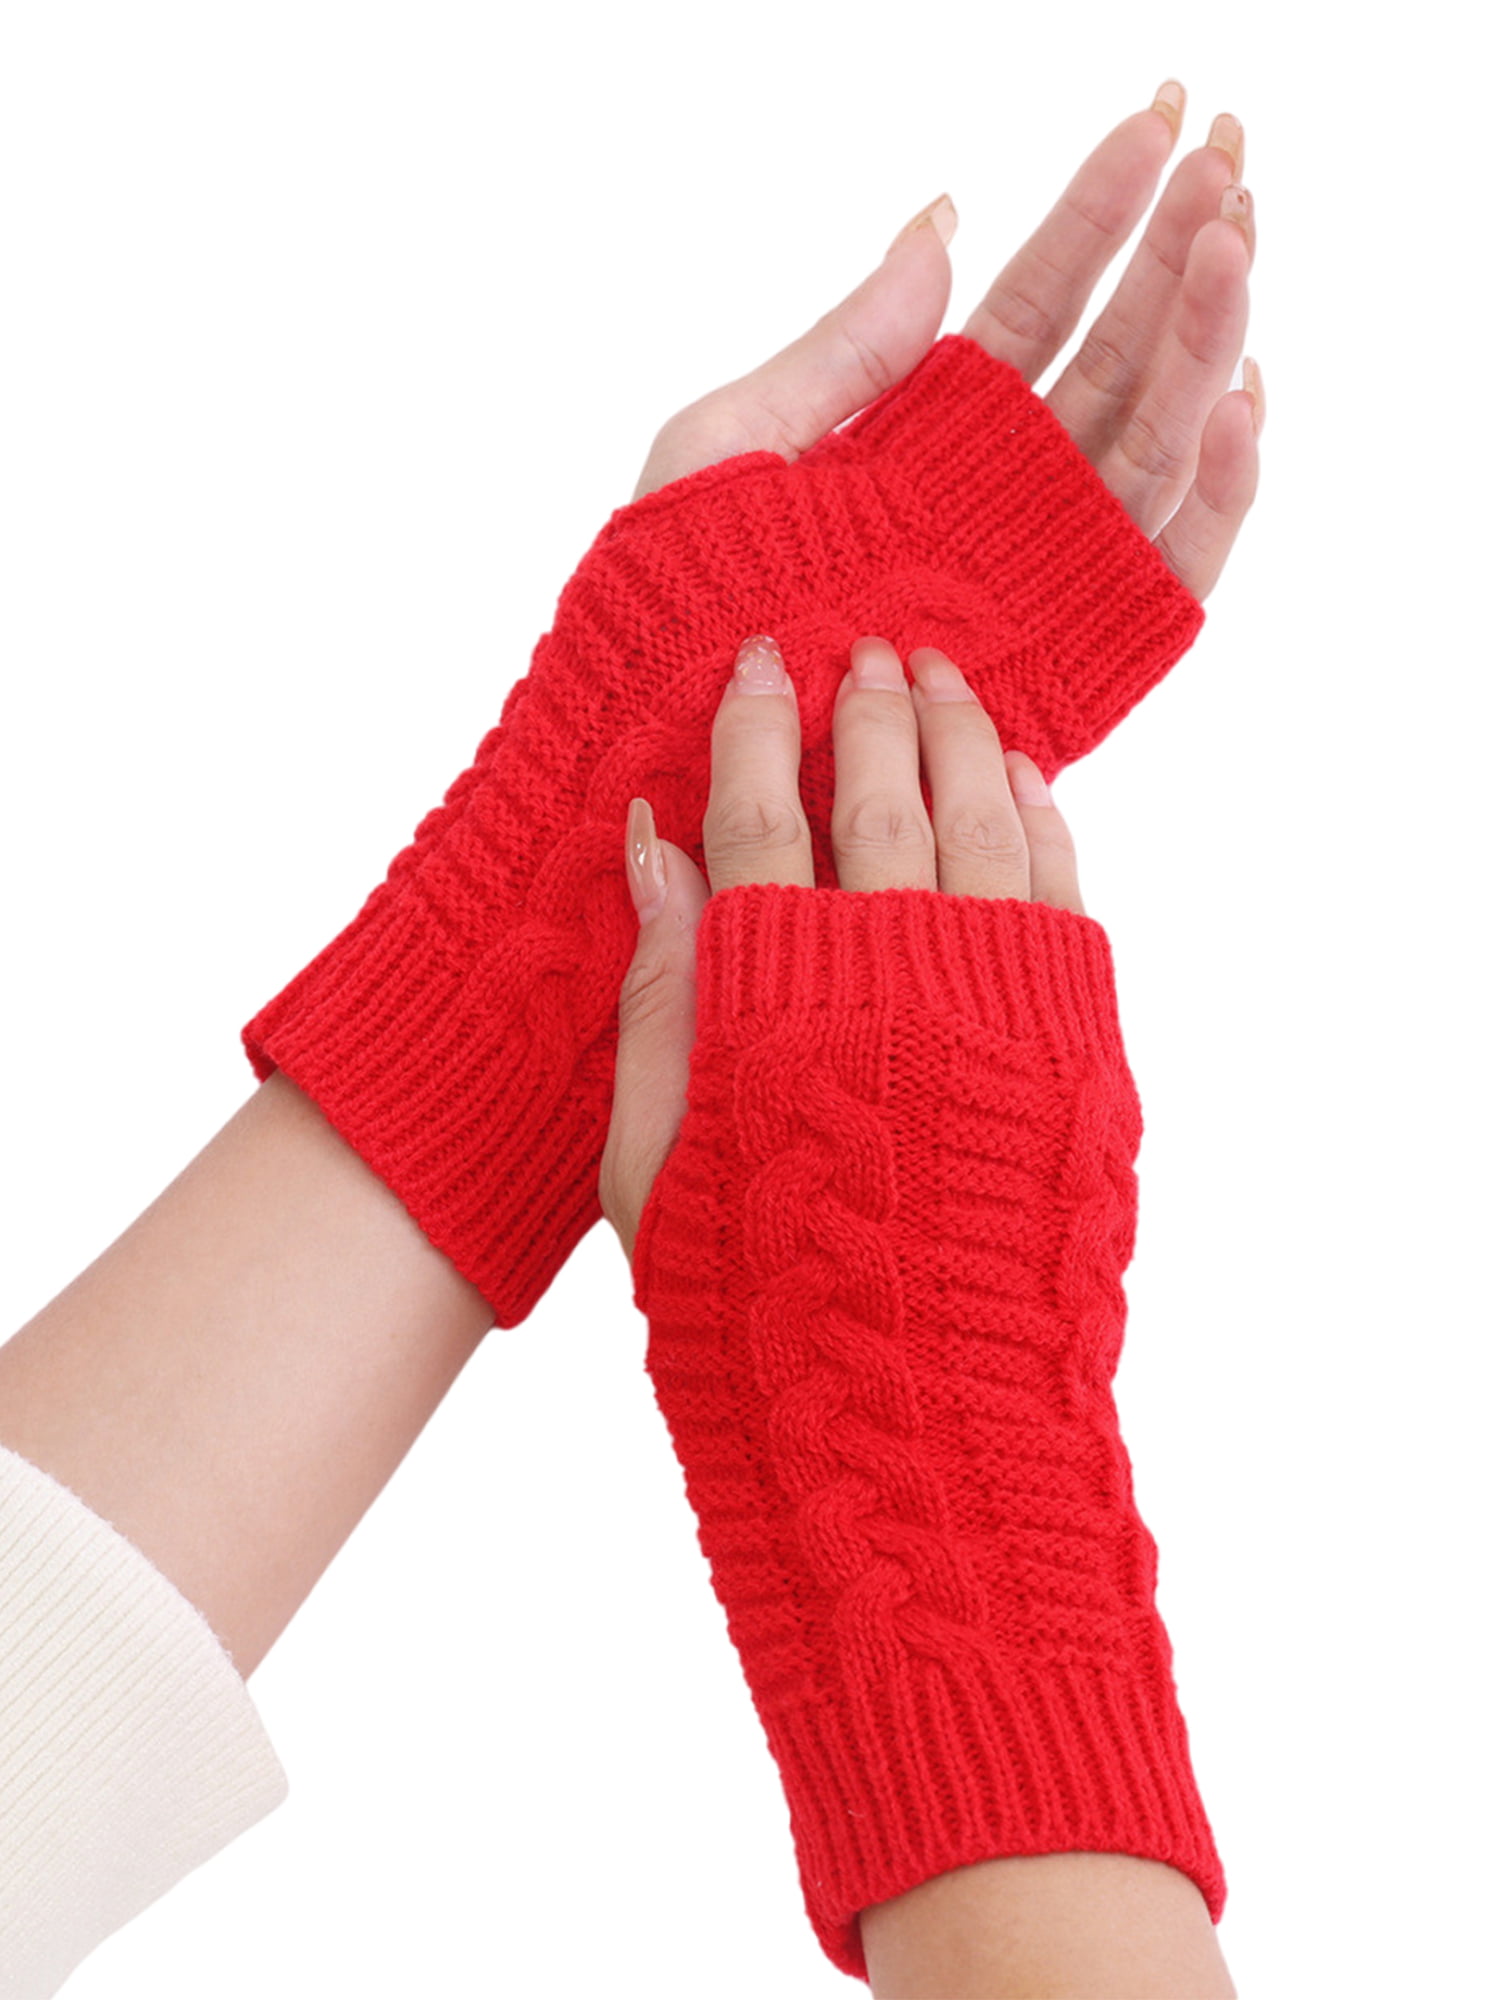 Women Arm Warmer Winter Long Fingerless Gloves Half Finger Knitted Soft Mittens